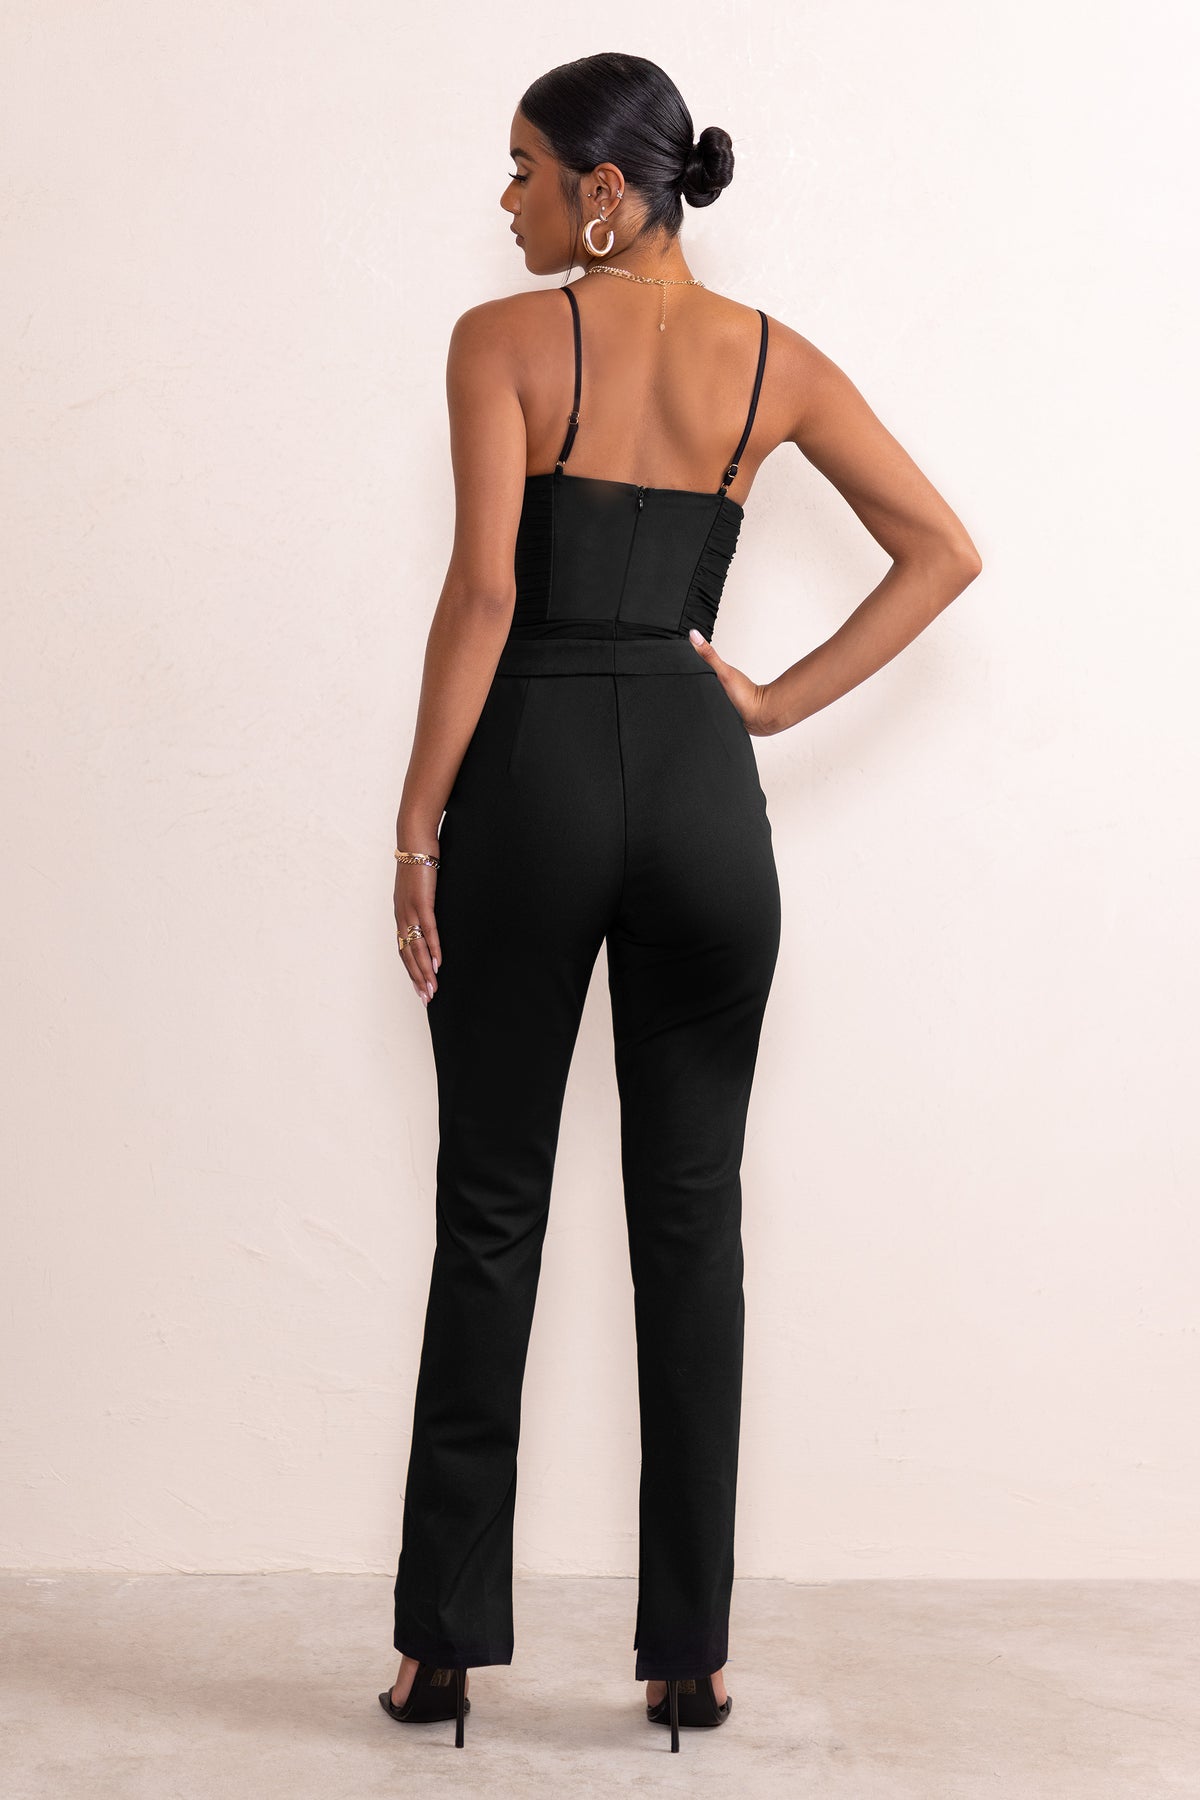 Buy Black Satin Corset Bodysuit for Women Online from India's